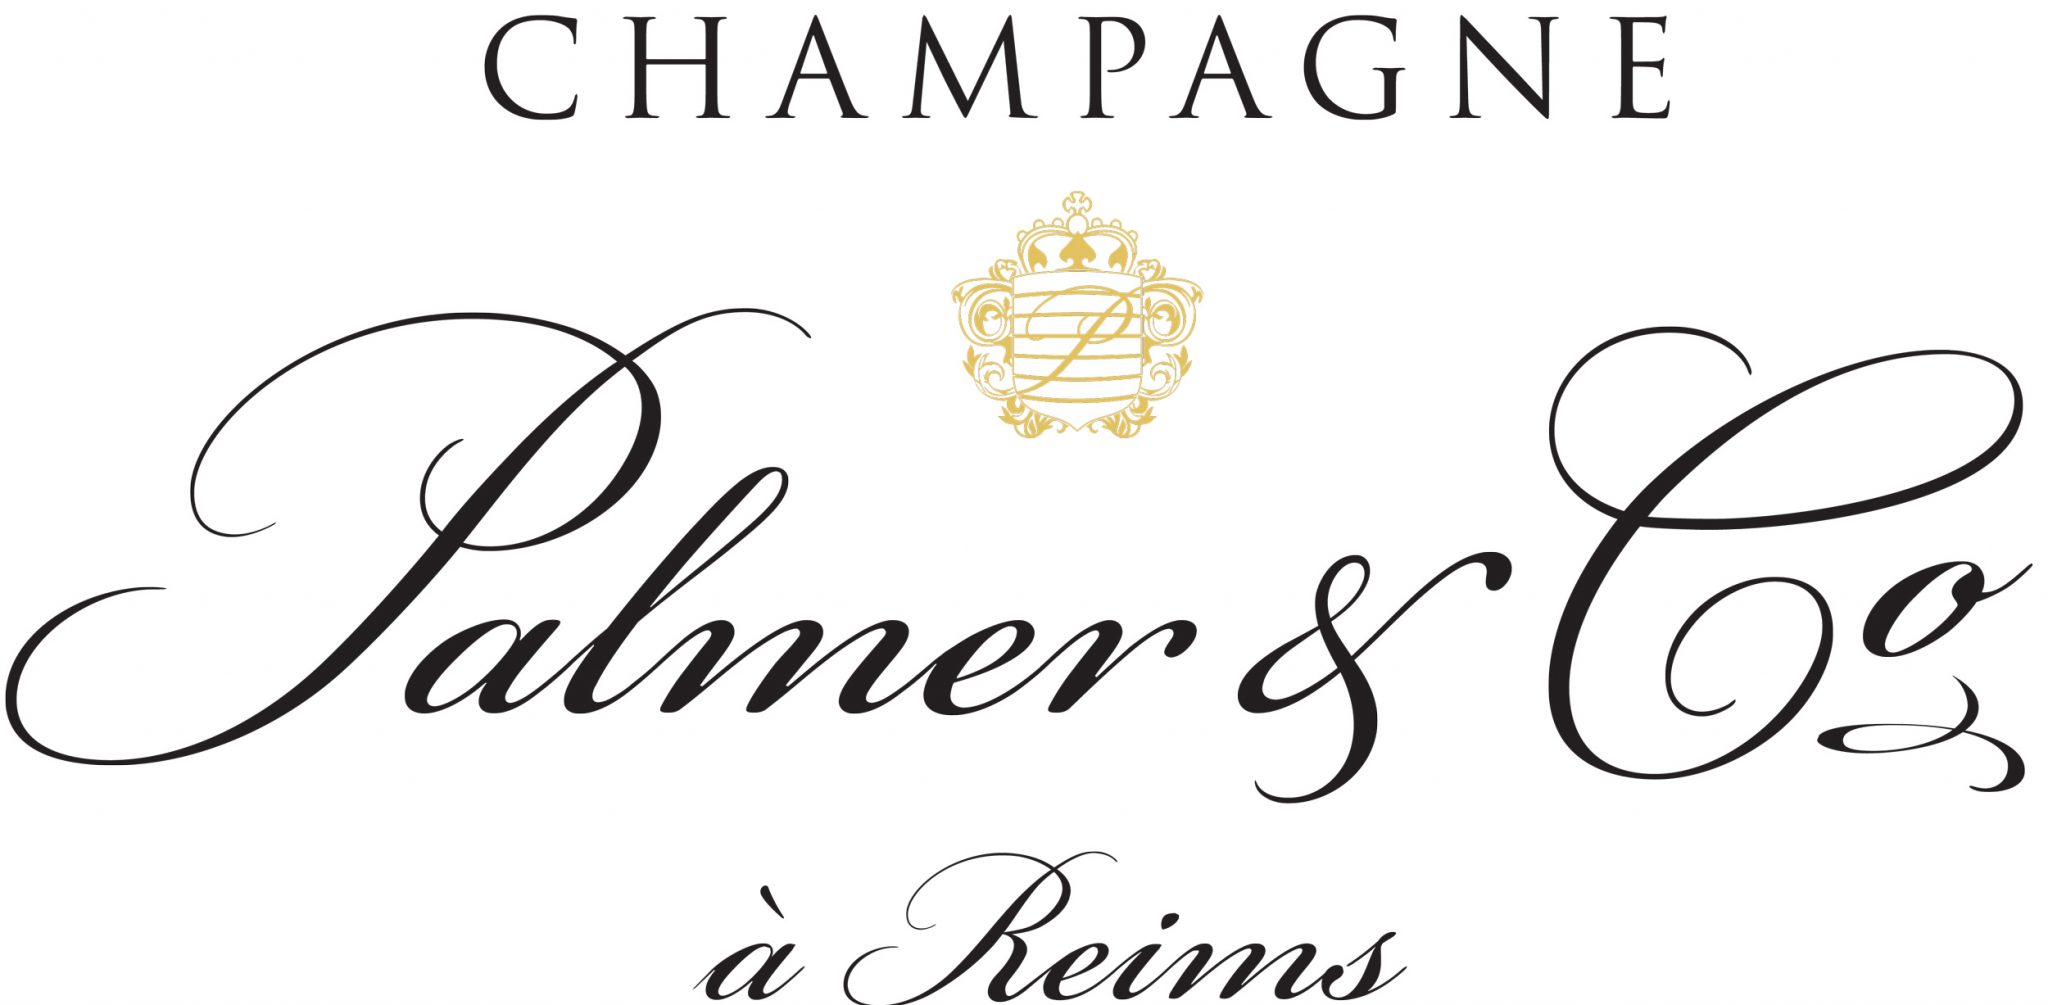 Champagne Palmer & C°